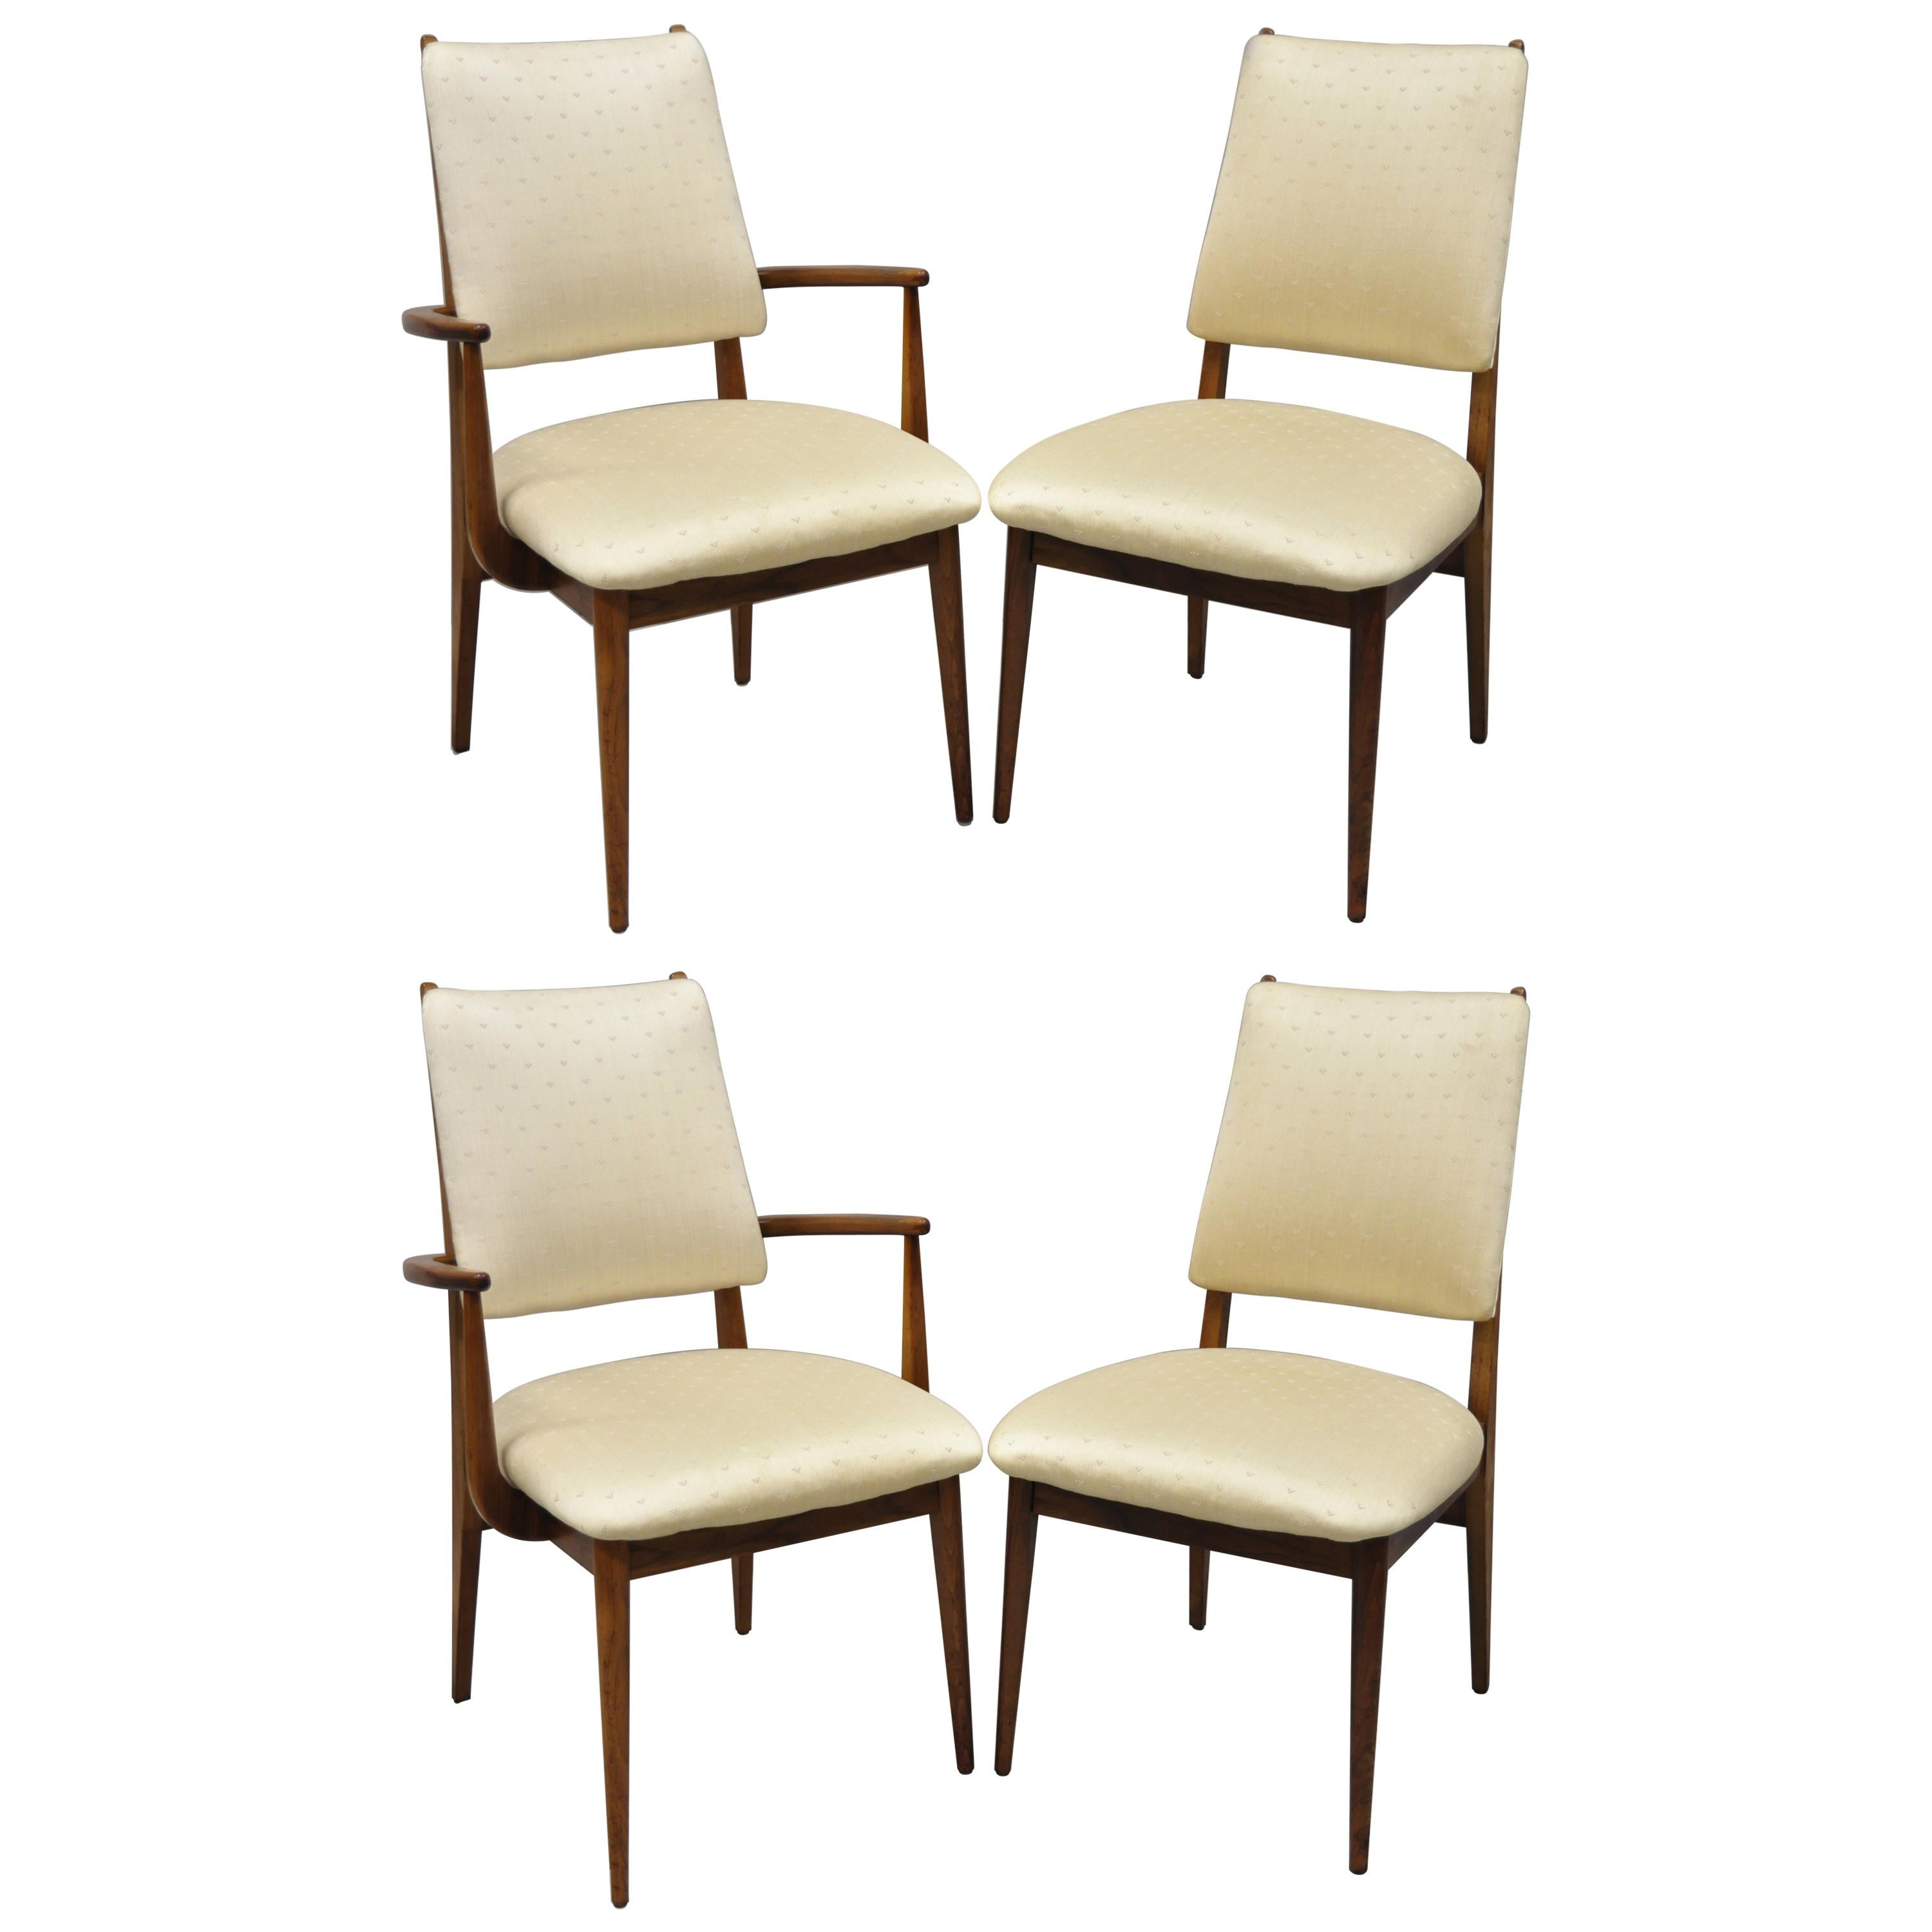 Set of 4 Vintage Midcentury Danish Modern Walnut Dining Room Chairs